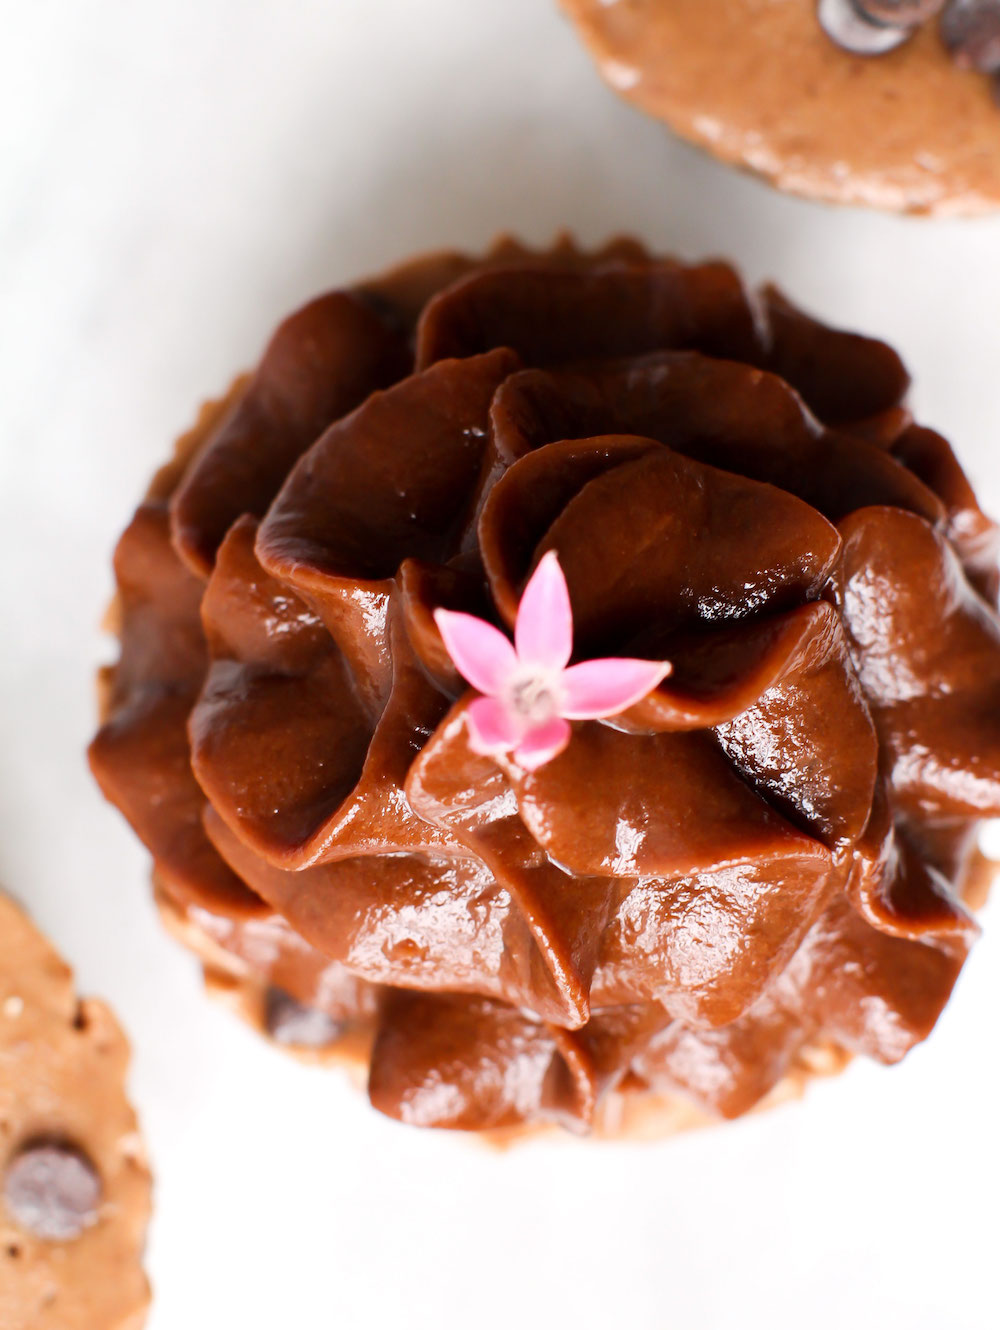 Double Chocolate Ice Cream Cupcakes | Vegan, Gluten-Free, Fruit-Sweetened